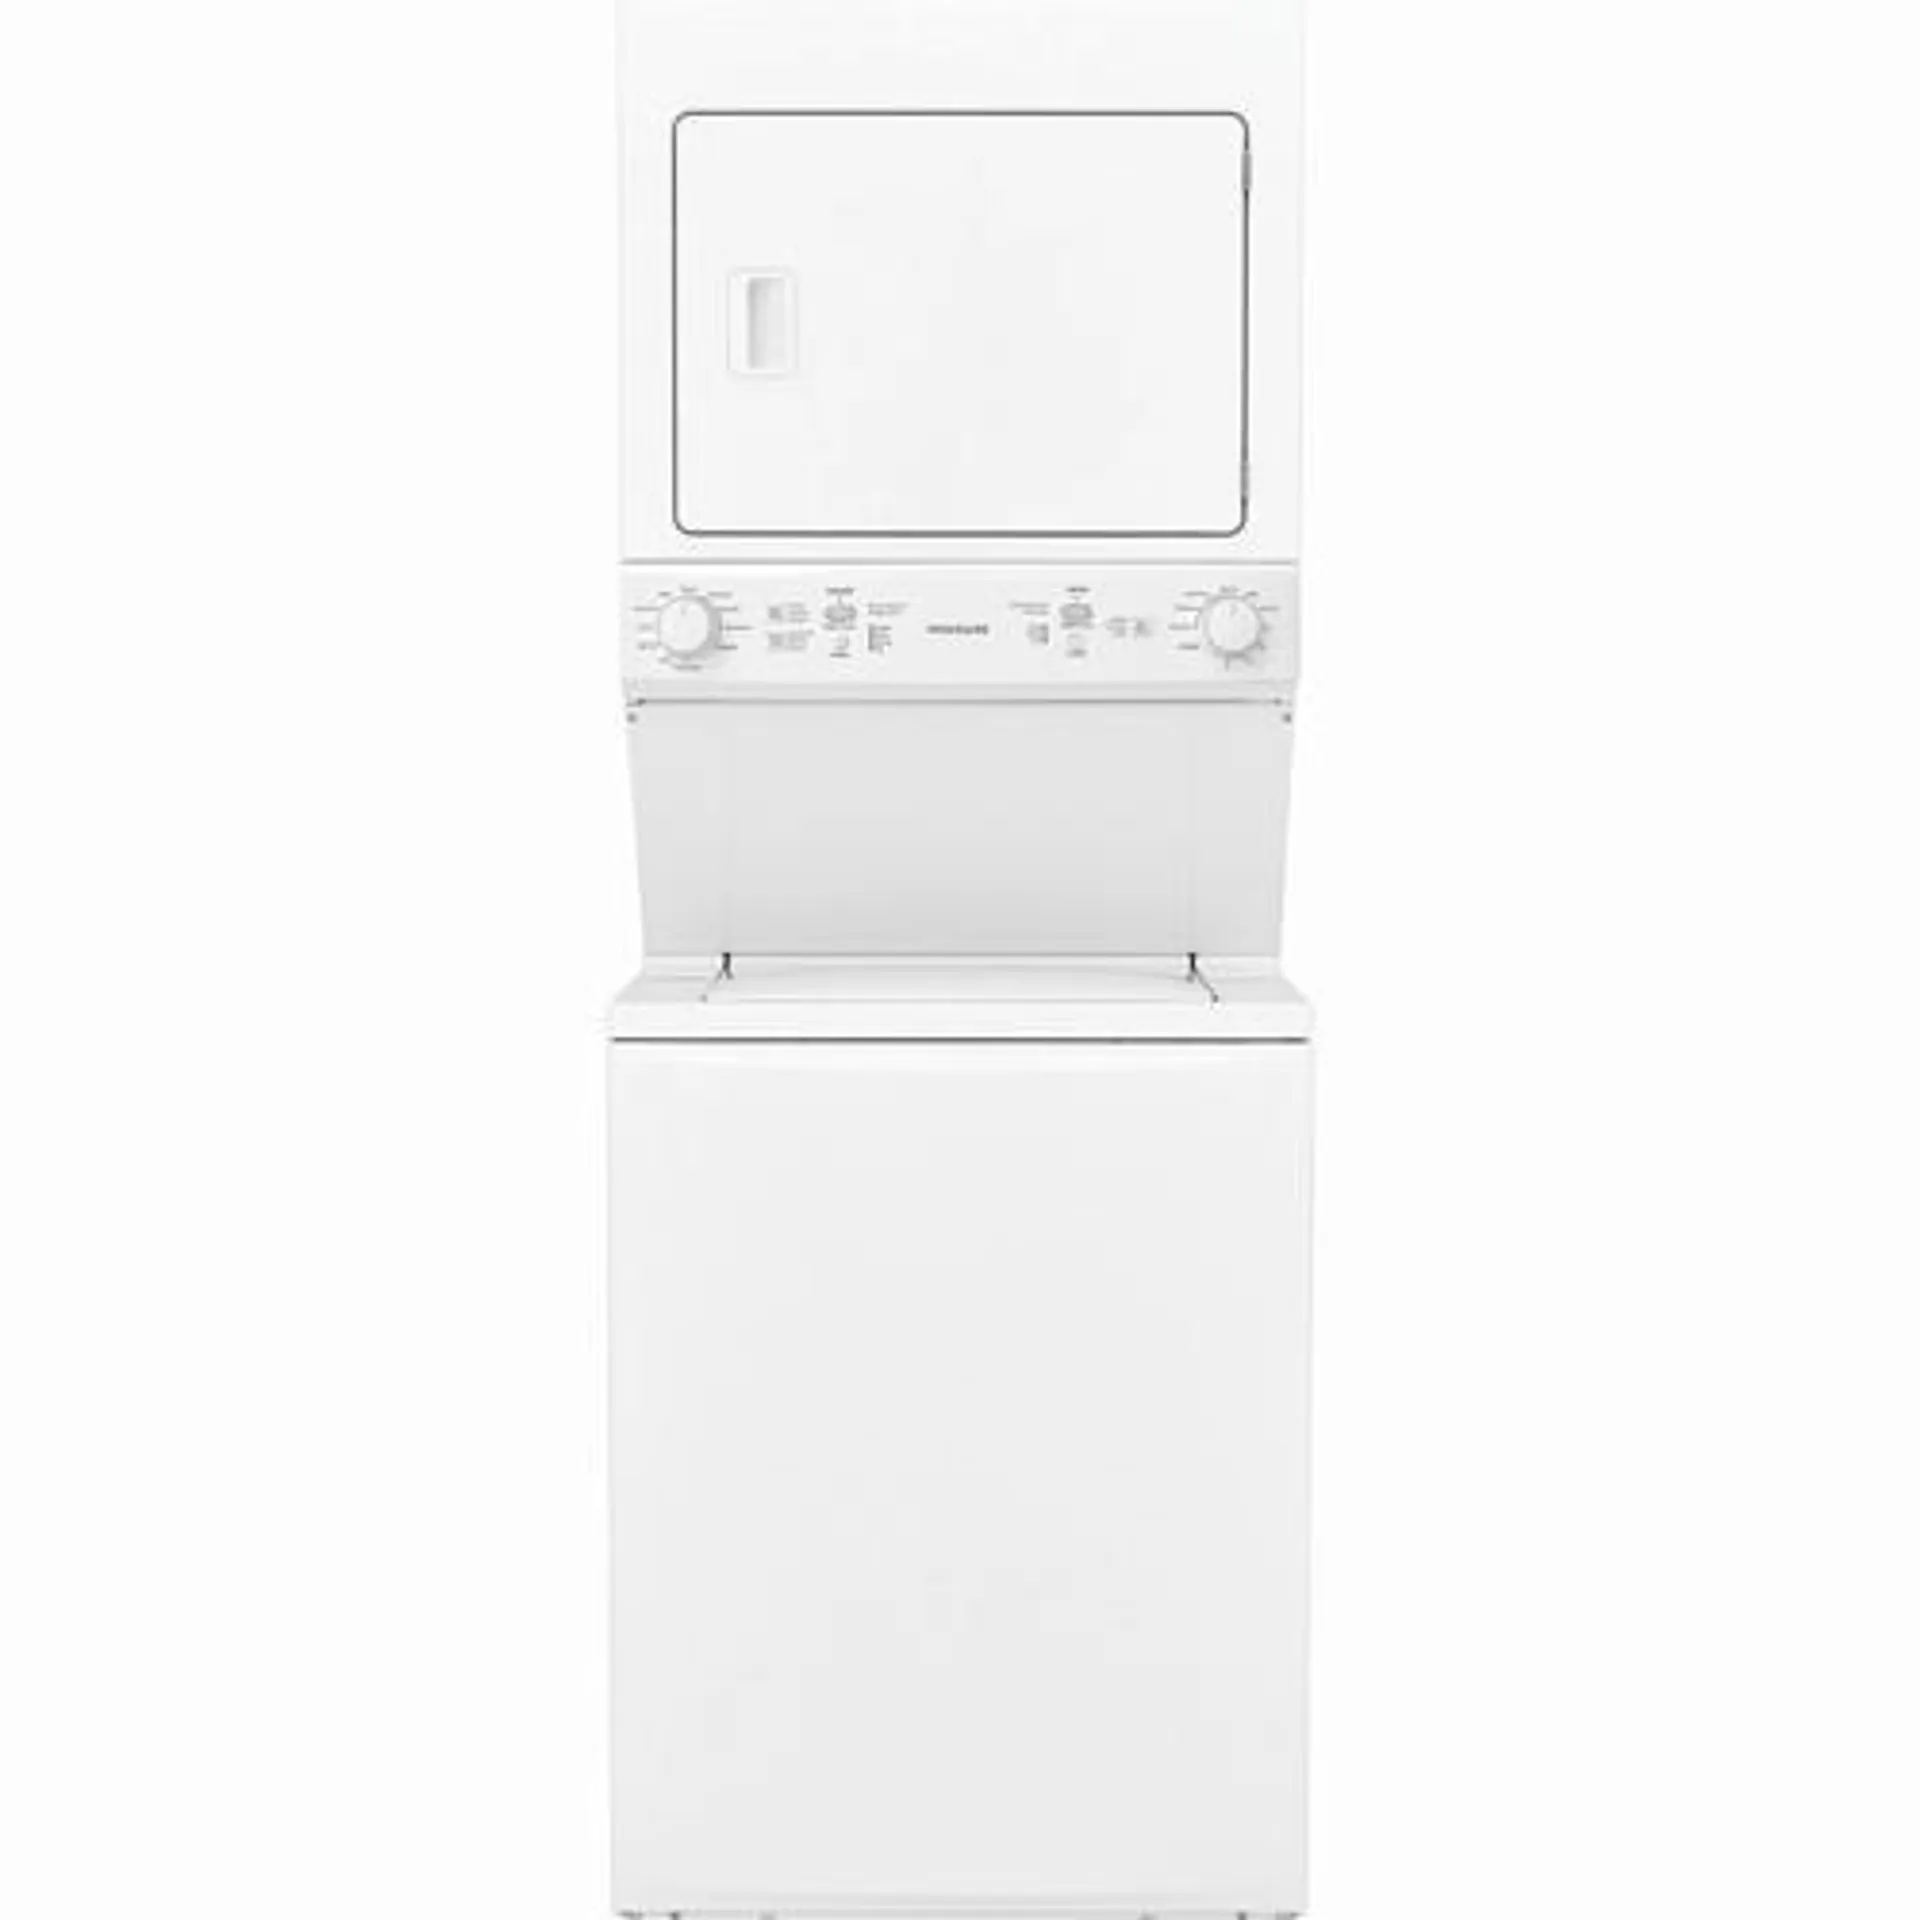 27" White Washer/Dryer Combination